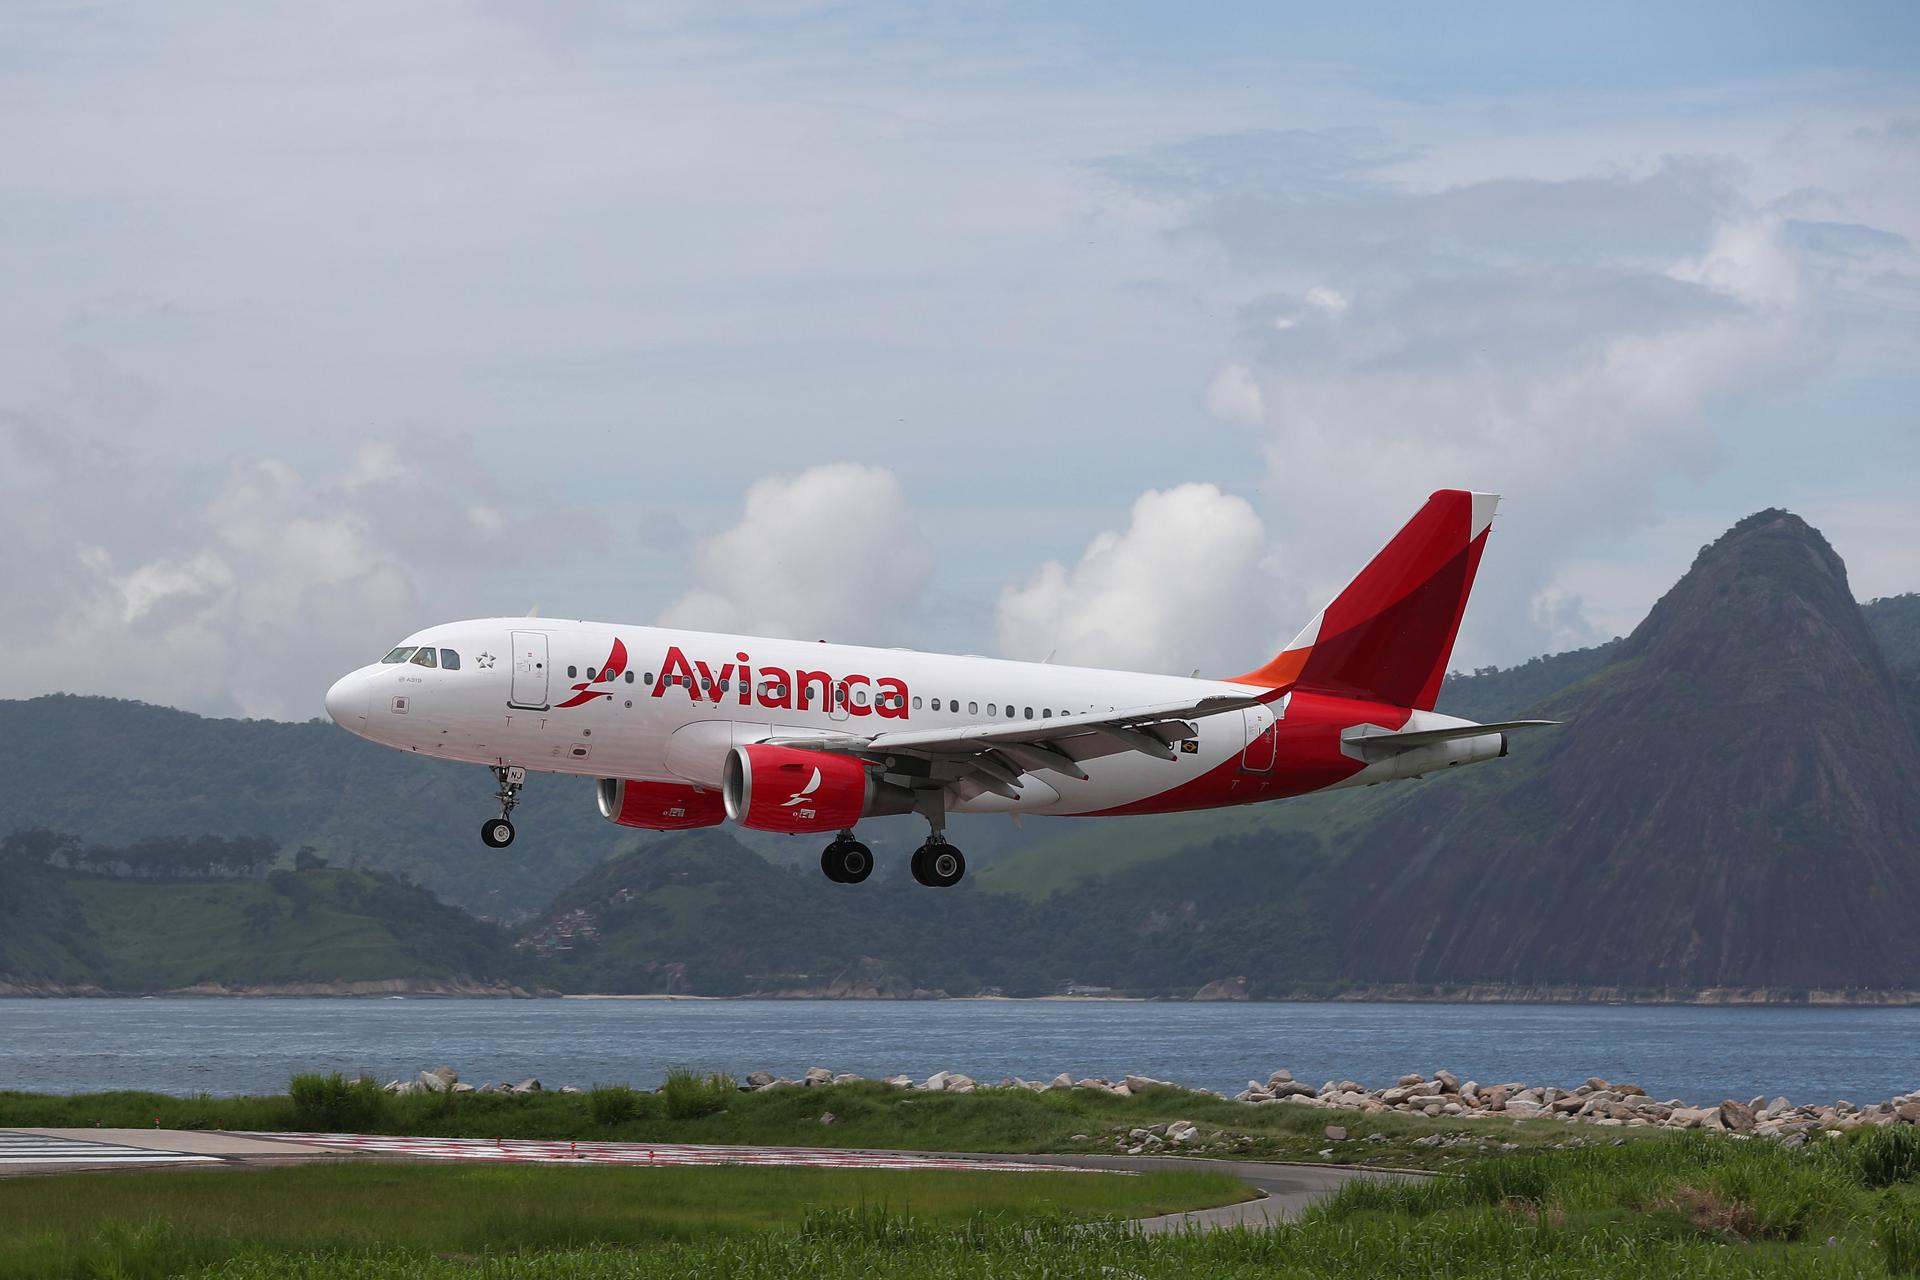 Avianca amplía fechas para reubicación gratuita de pasajeros de Viva Air